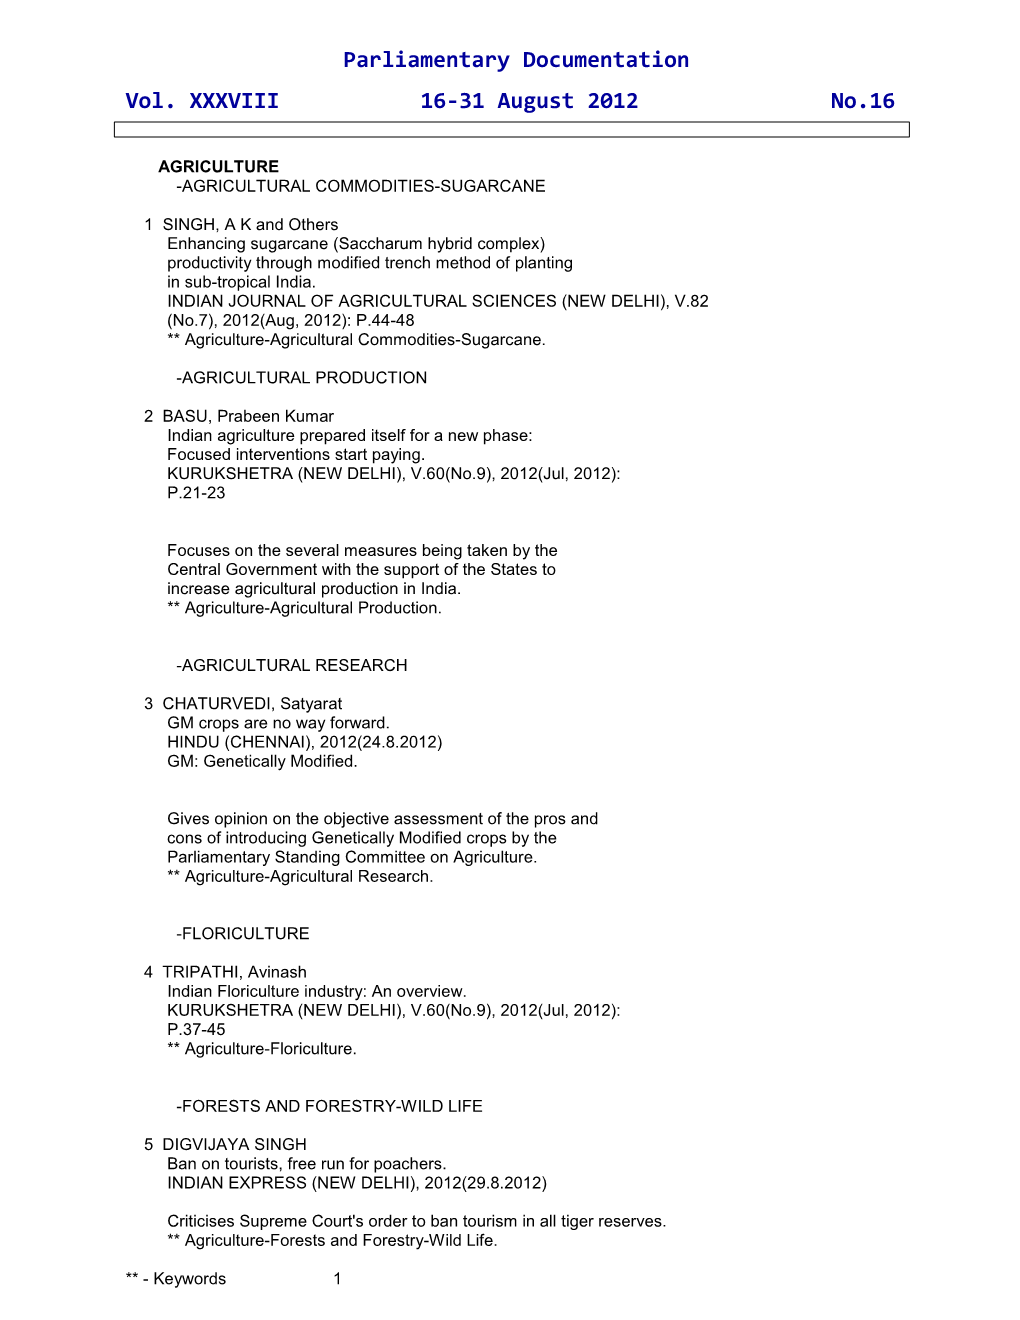 Parliamentary Documentation Vol. XXXVIII 16-31 August 2012 No.16